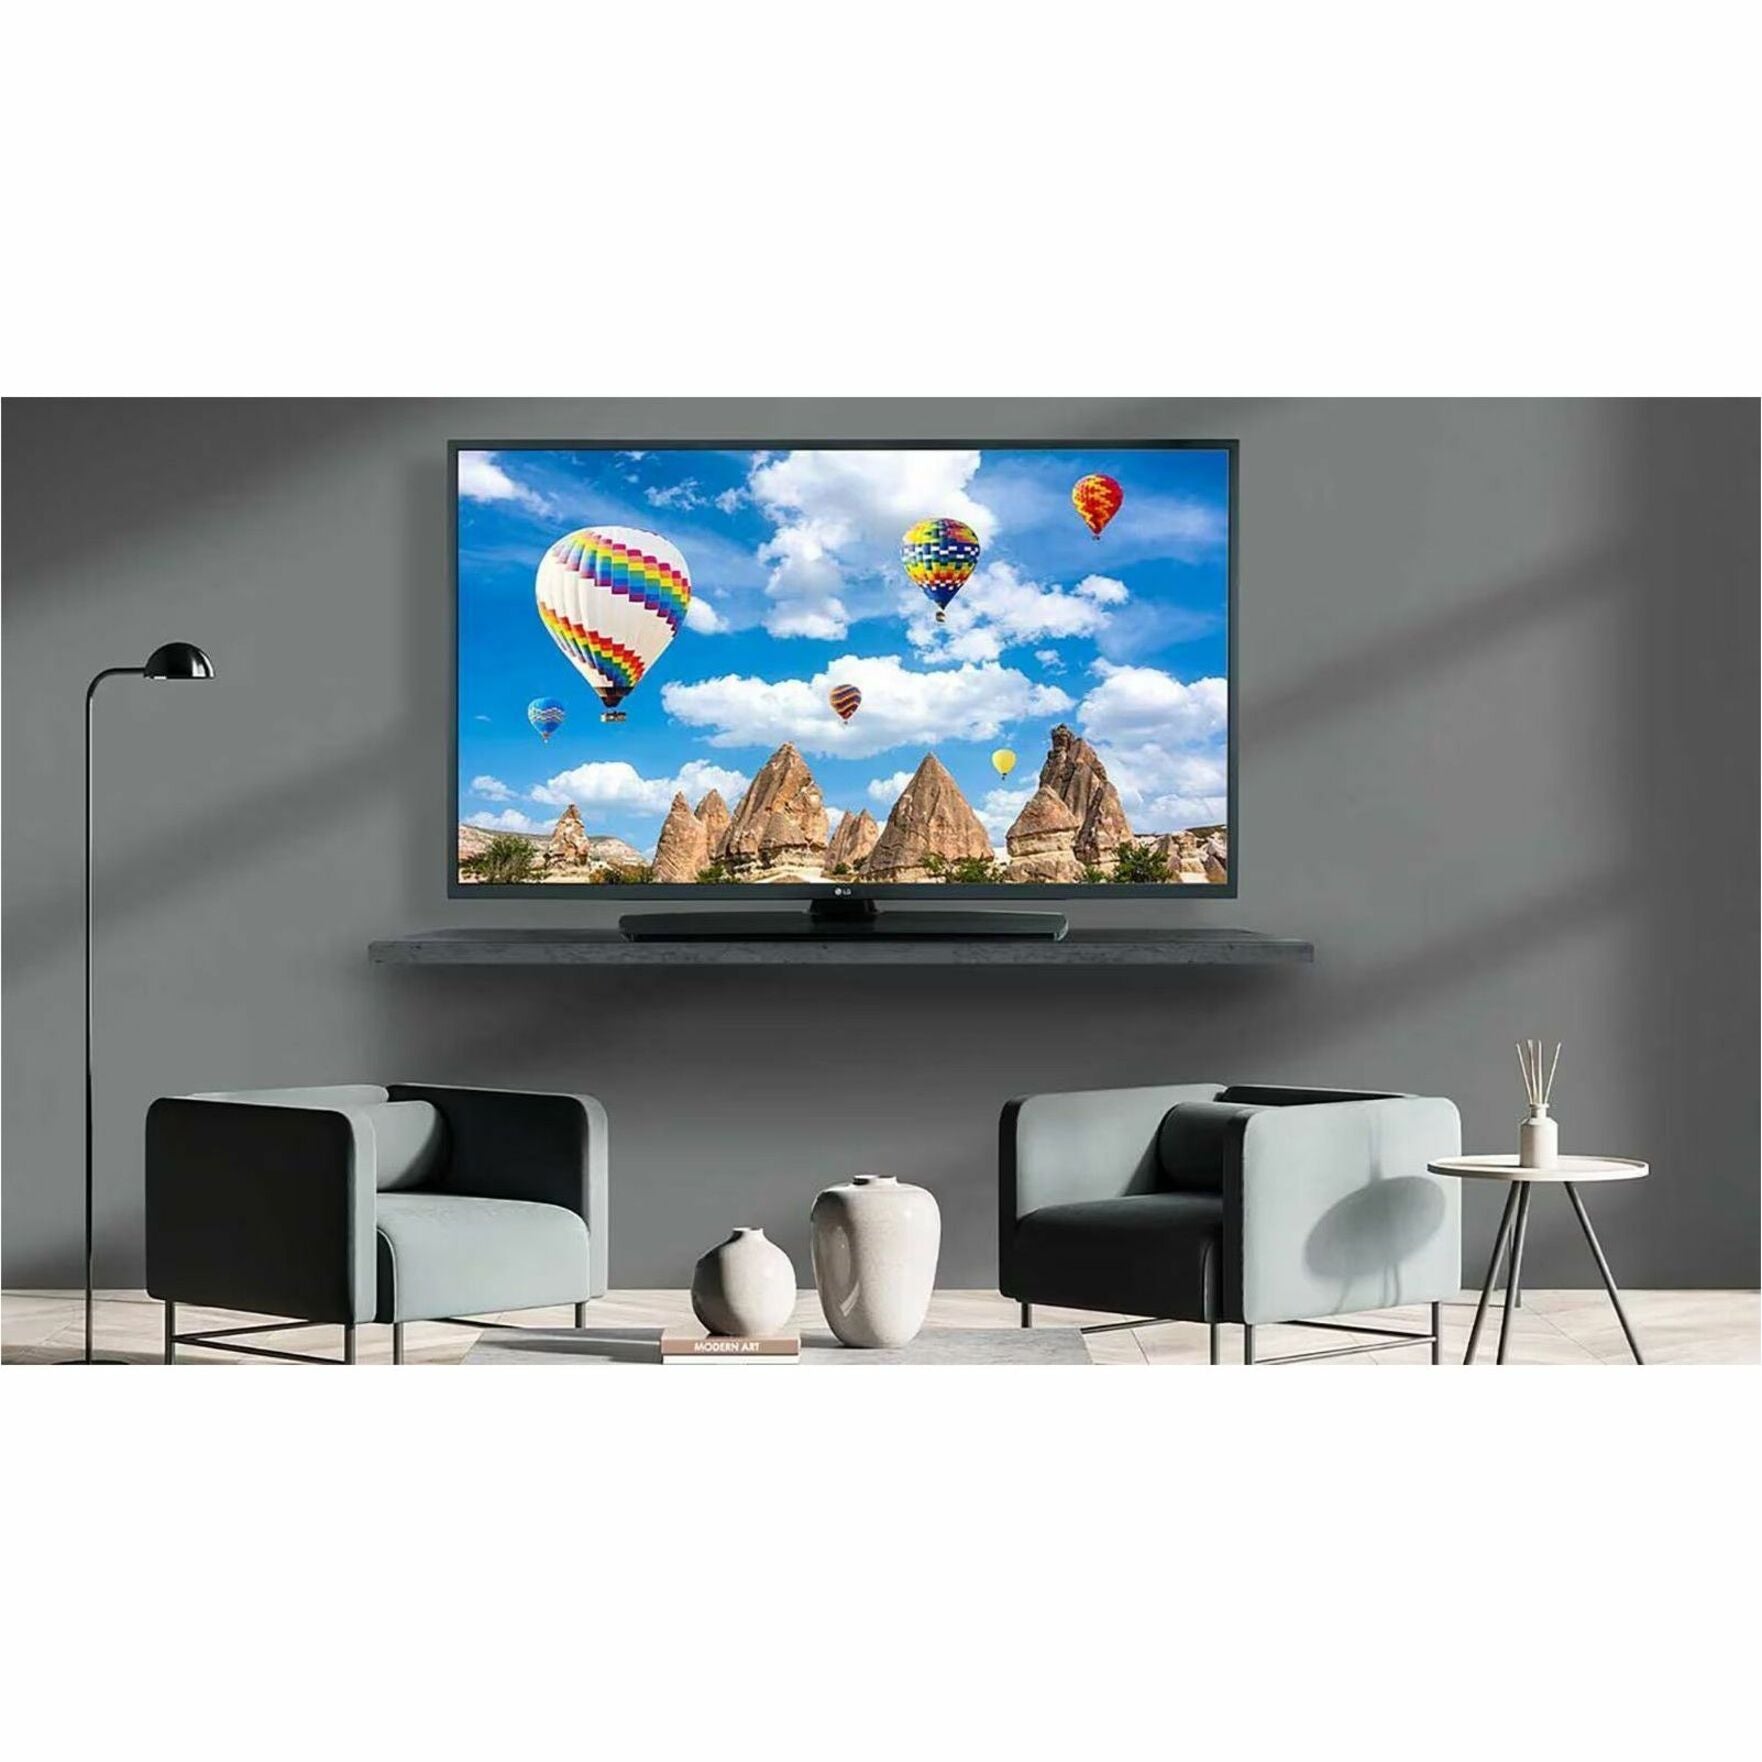 LG 55UN570H0UA Smart LED-LCD TV, 4K UHDTV, High Dynamic Range (HDR), Dark Ash Charcoal